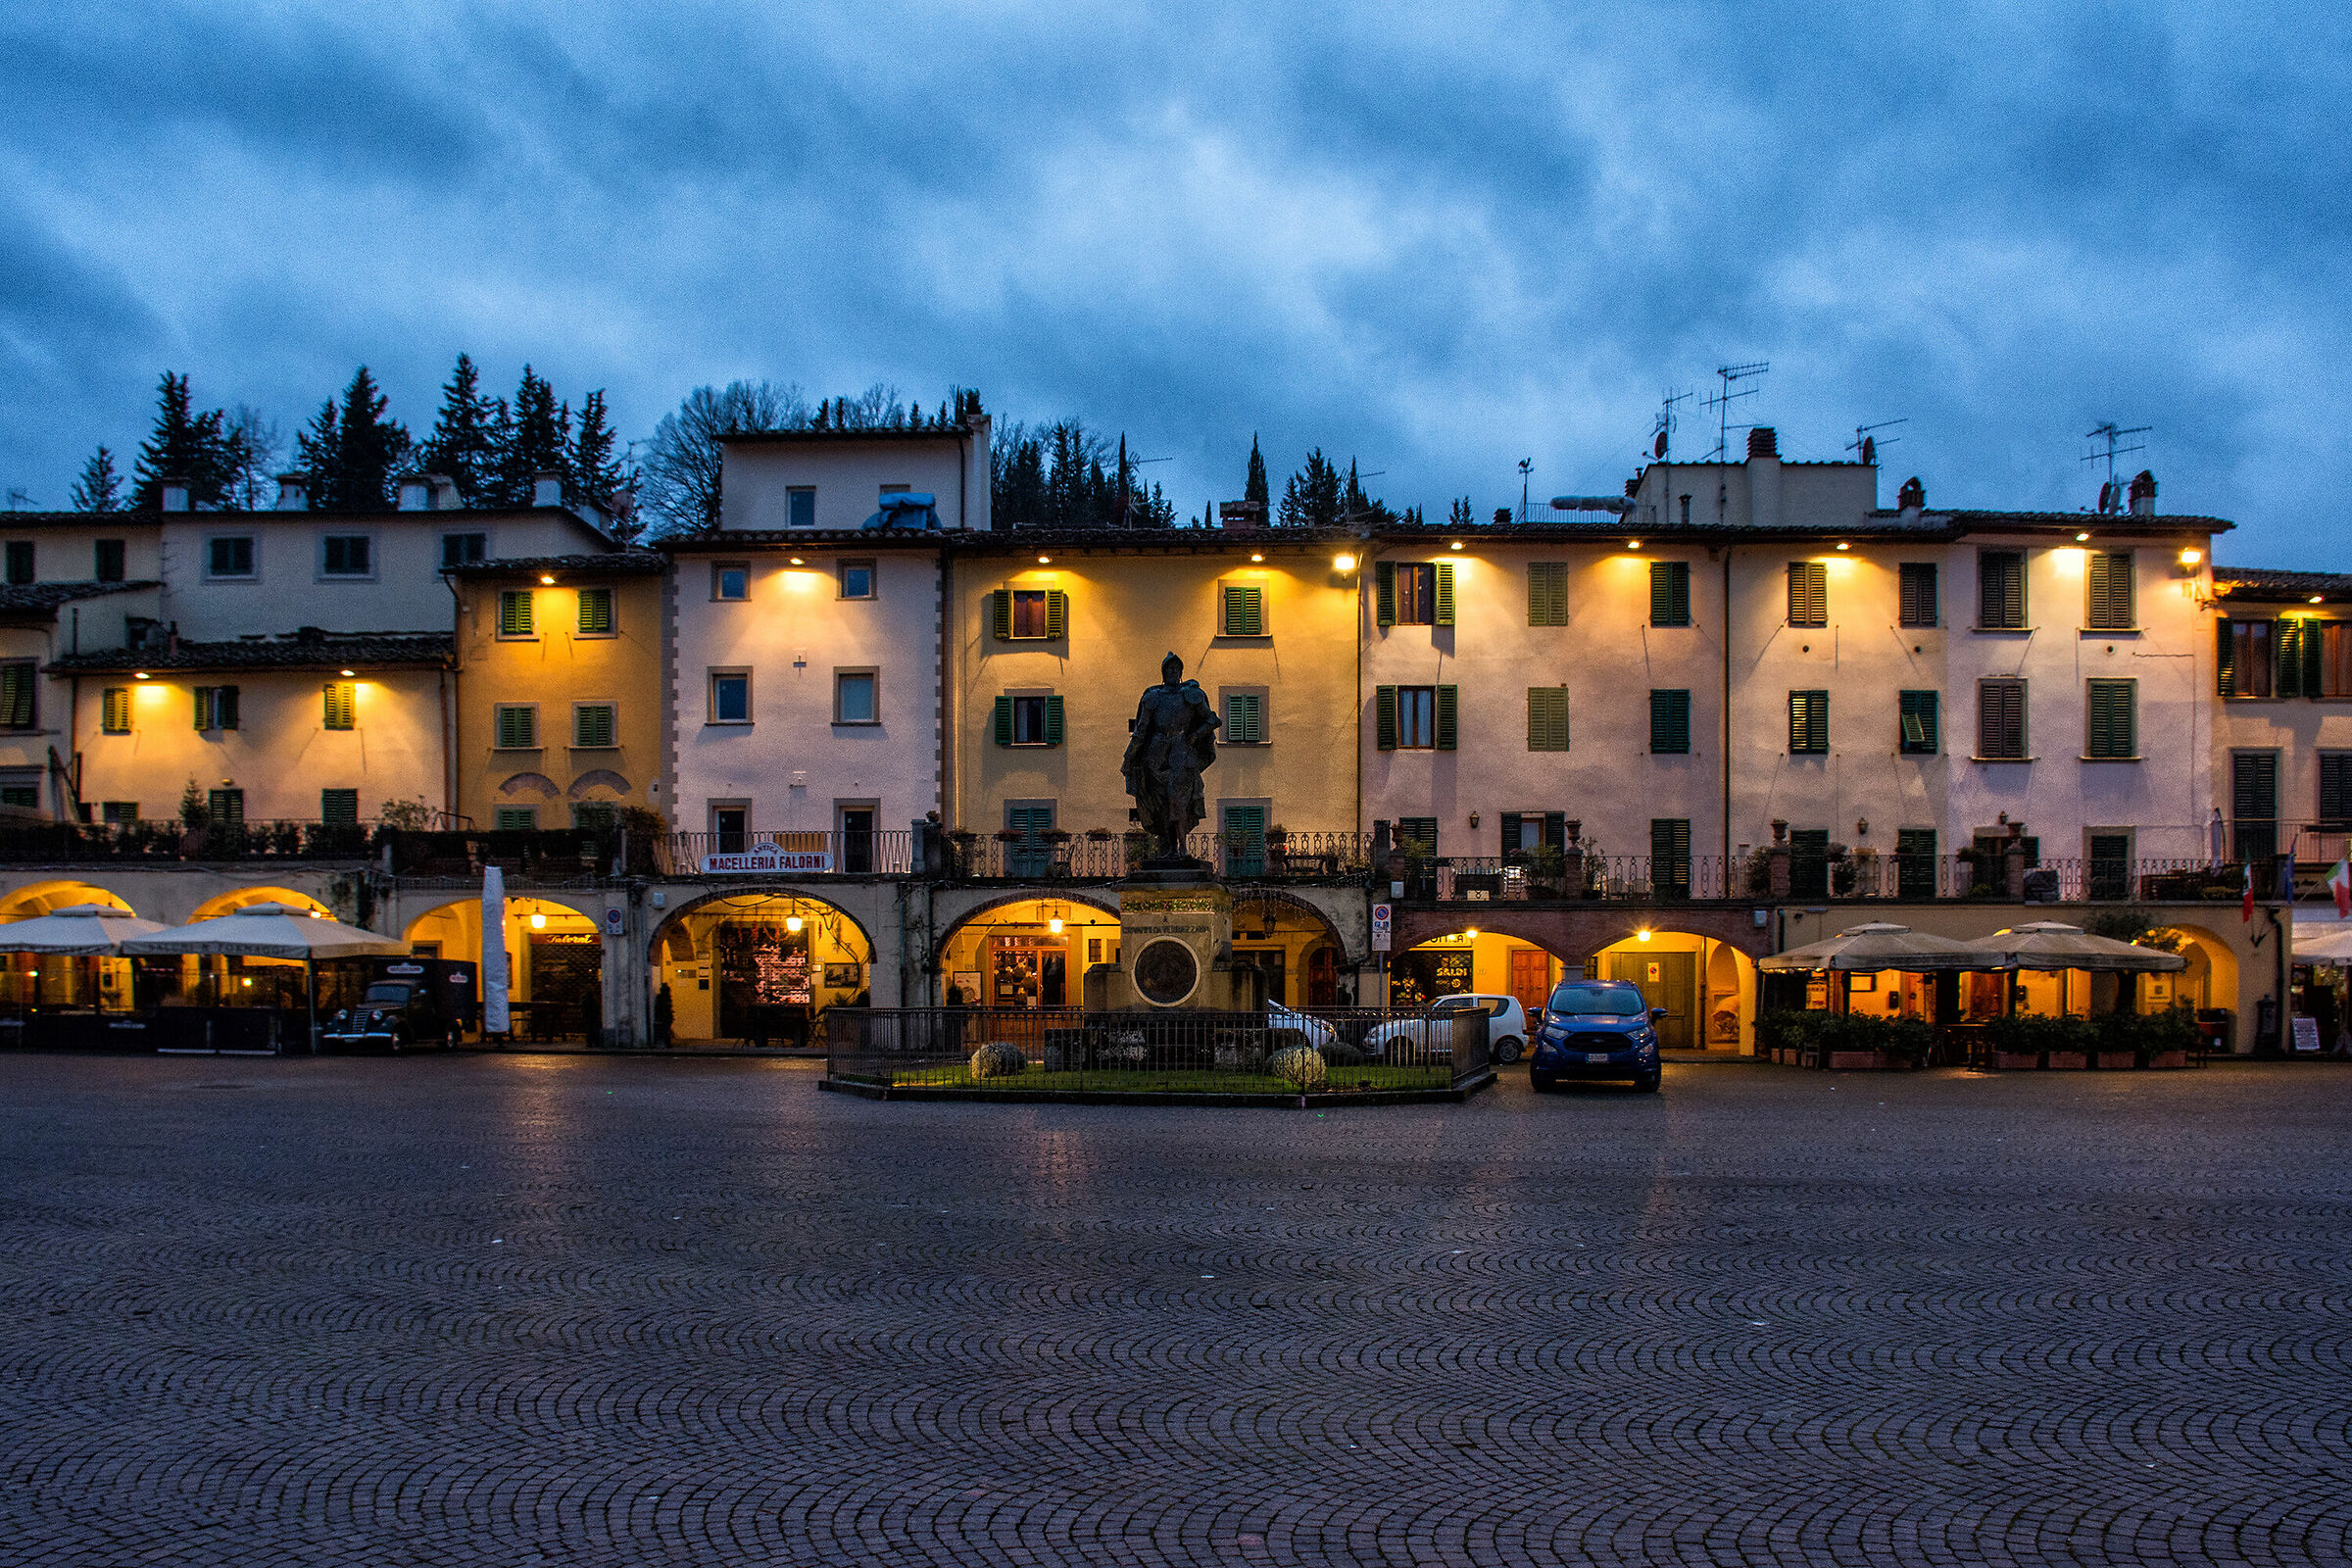 The square of Greve in Chianti...